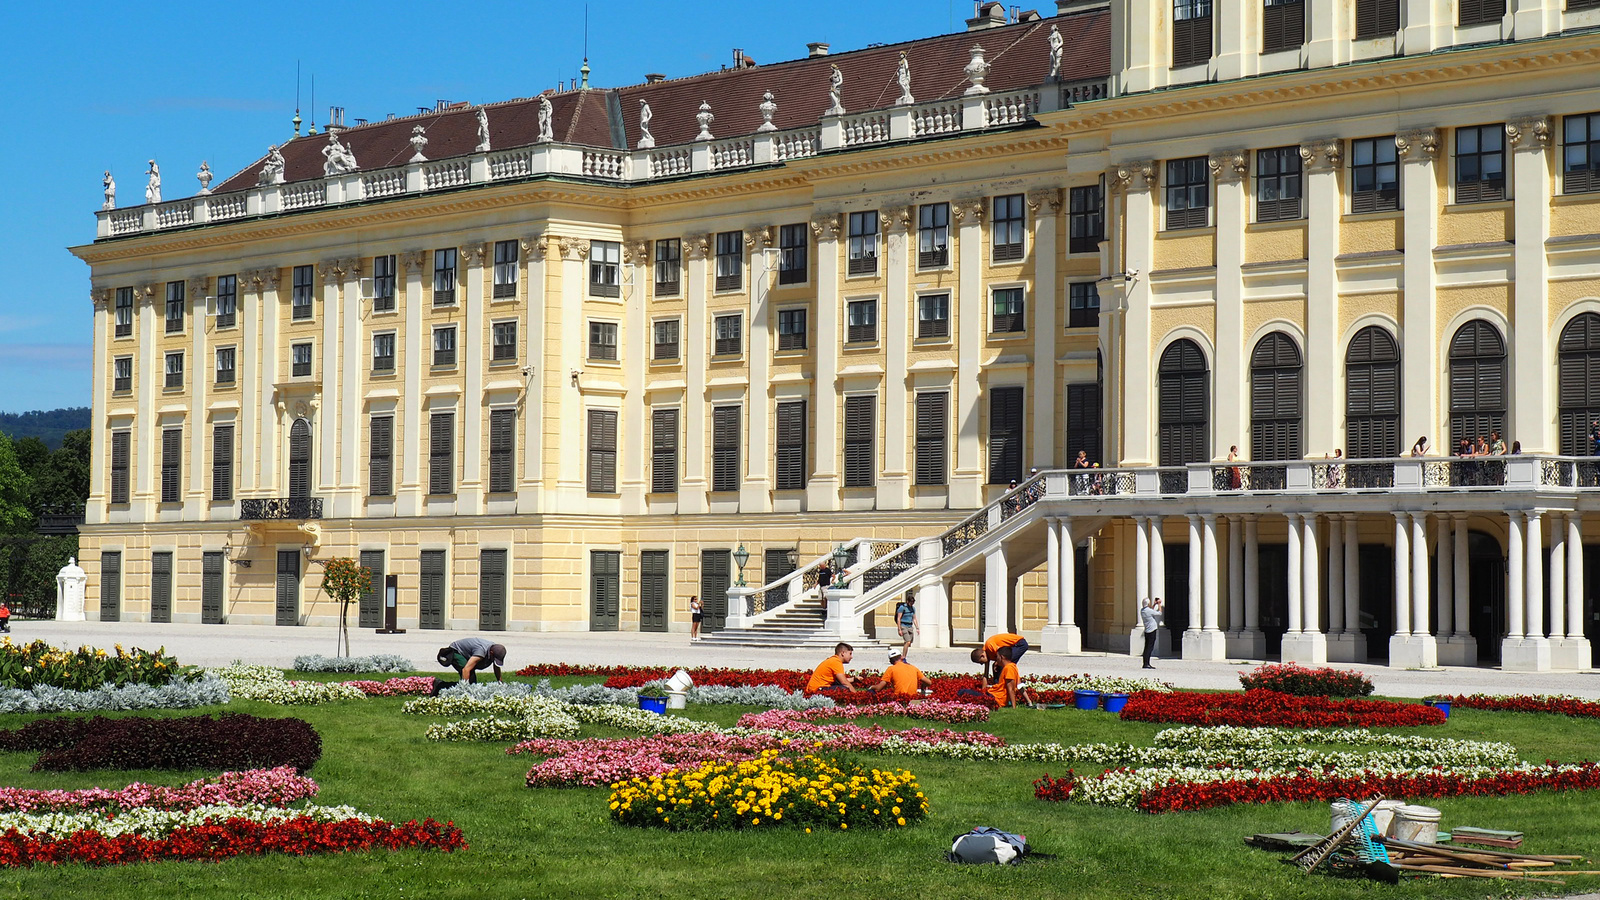 Bécs, Schönbrunn, kastélypark, SzG3